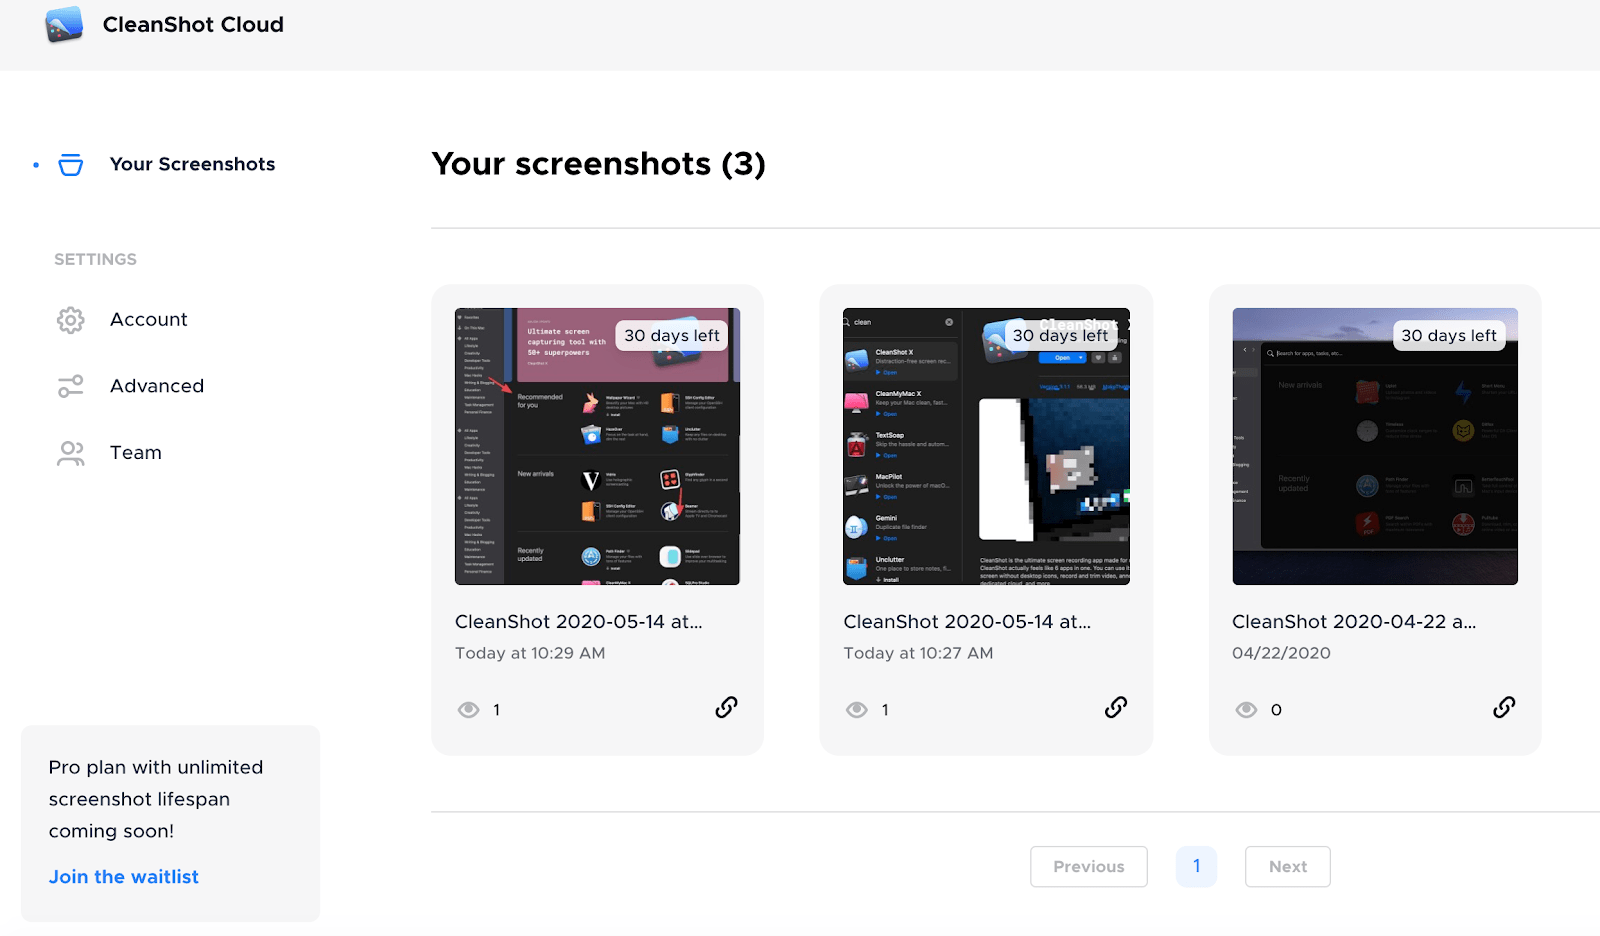 how to do a screenshot on a mac